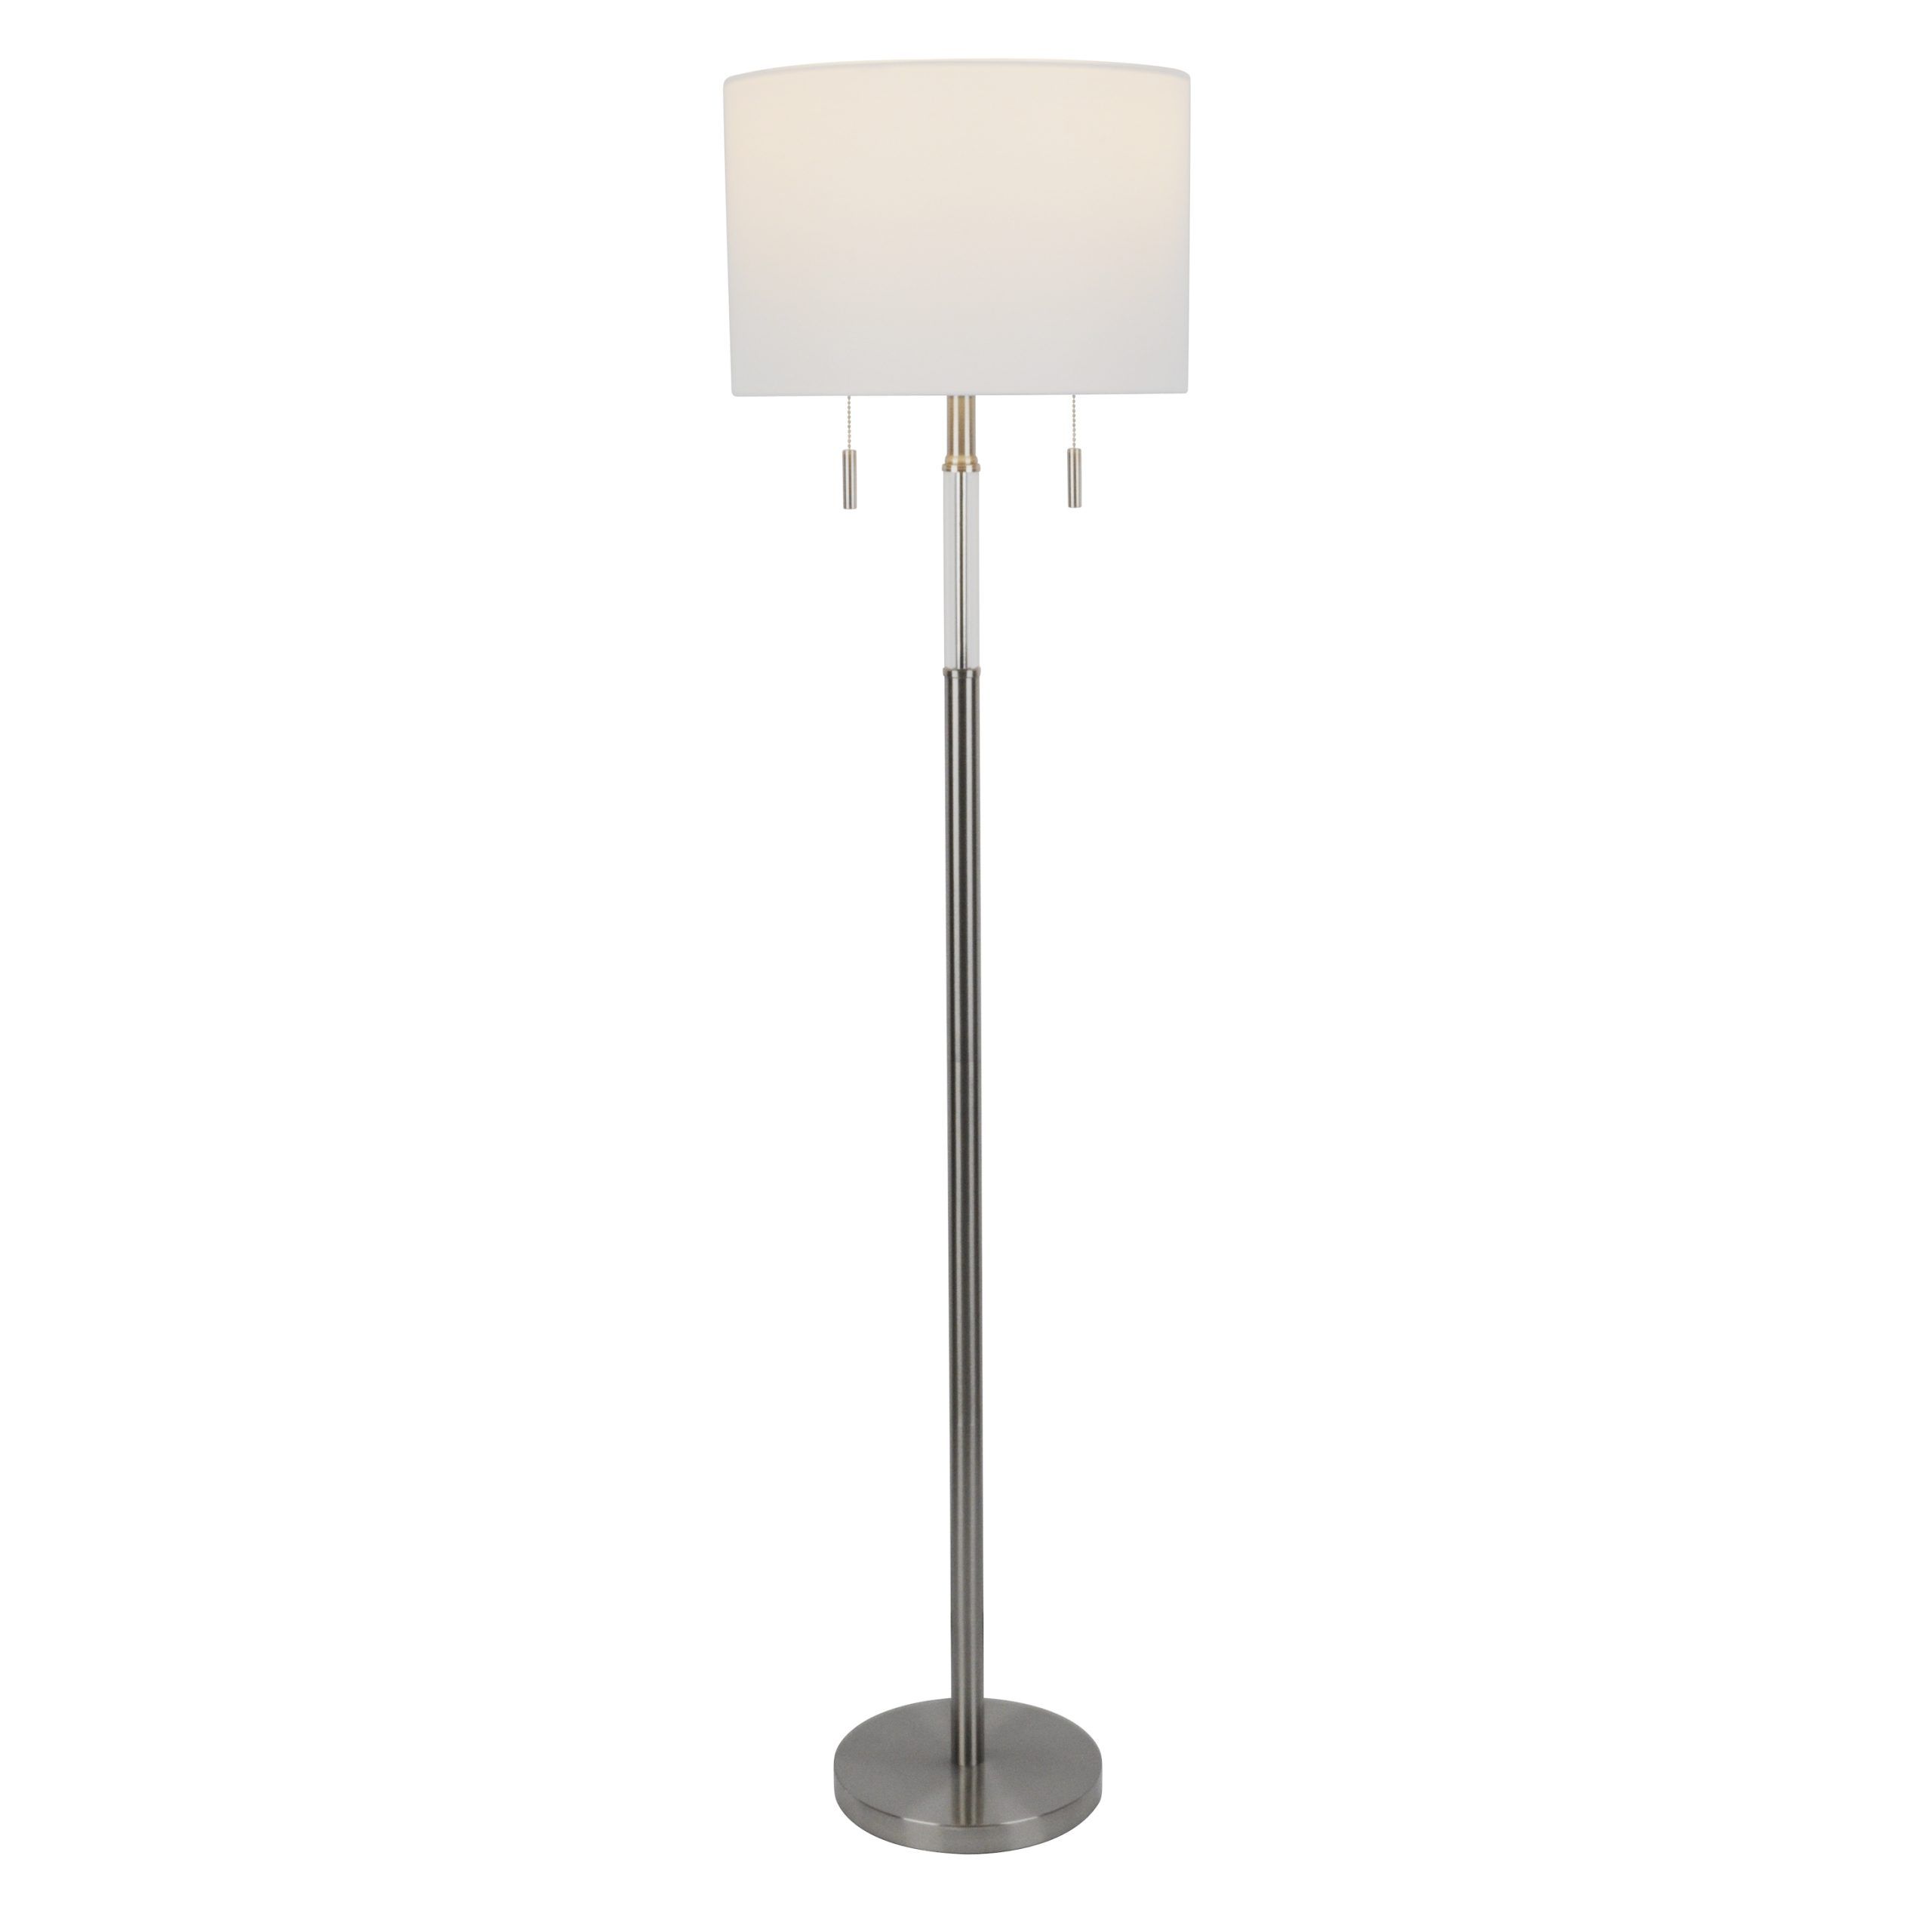 Dual Pull Chain Floor Lamps Regarding Most Current Ferina Twin Pull Chain Floor Lamp – Walmart (View 13 of 15)